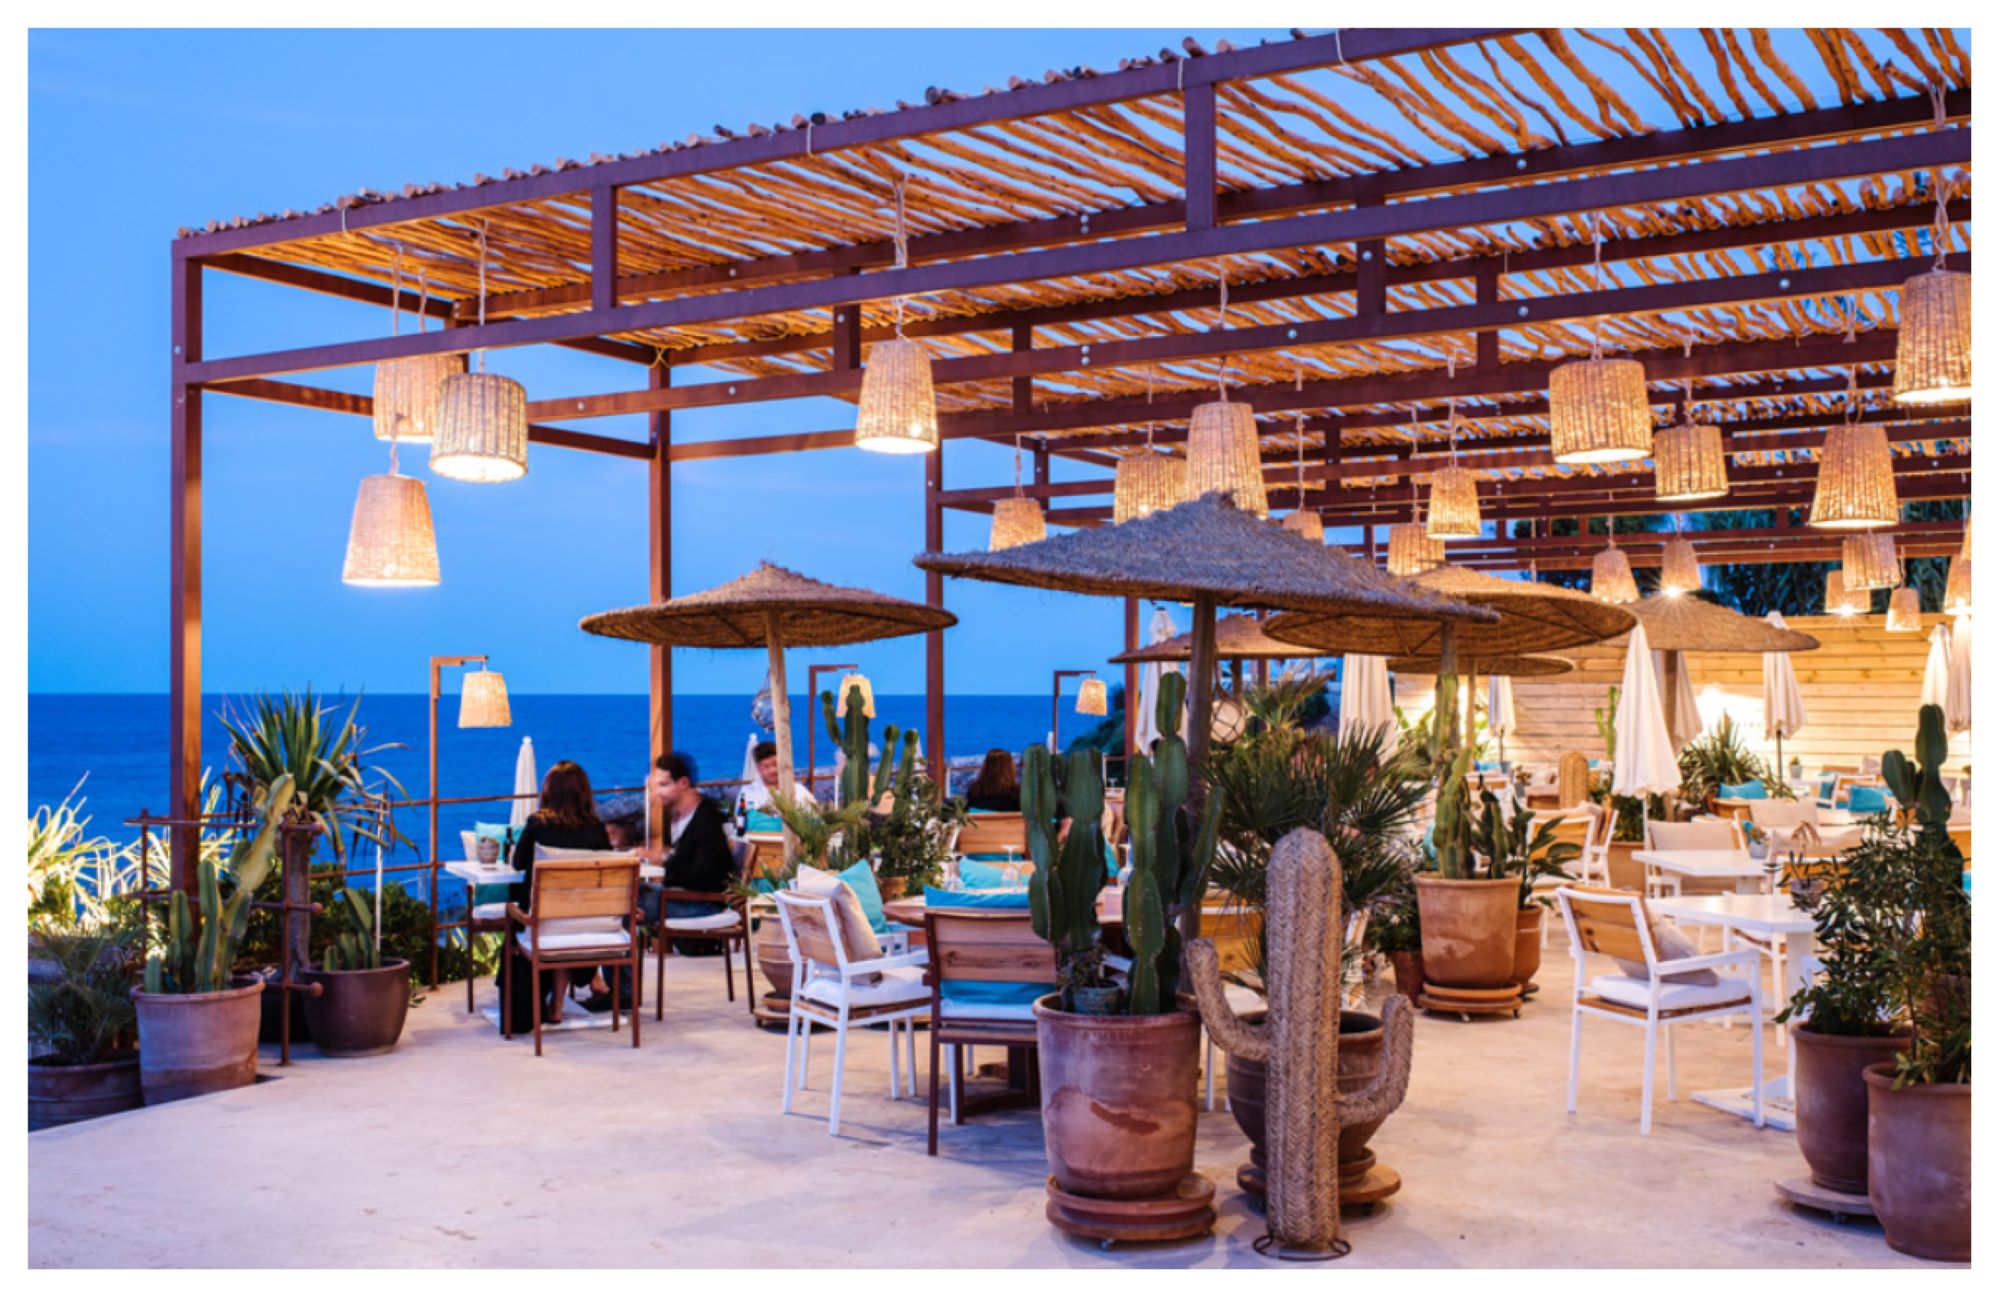 BONA MIDA 15 mejores restaurantes playa beach club ibiza formentera 2021